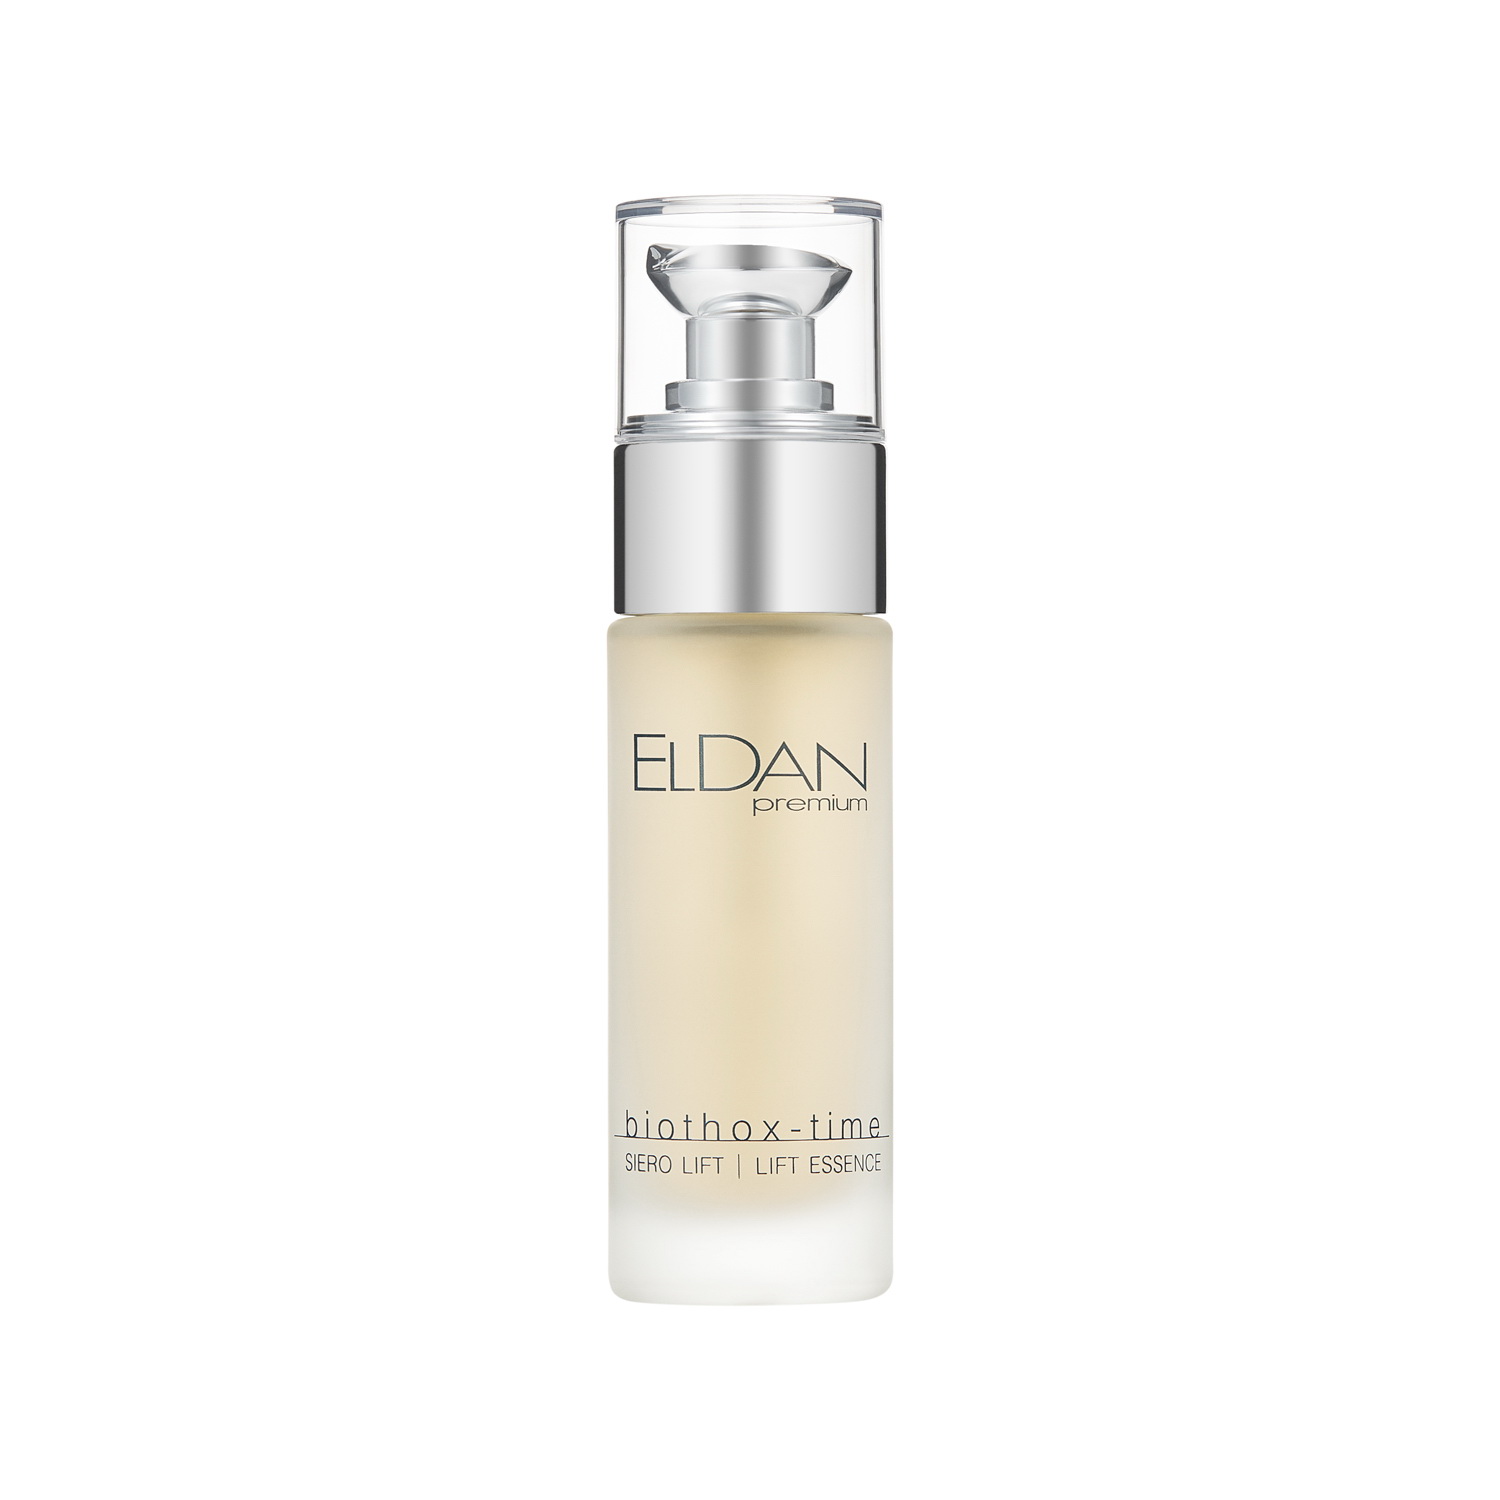 Сыворотка для лица Eldan Cosmetics Premium Biothox Time Lift Essence лифтинг, 30 мл eldan средство для упругости и объема губ premium 15 мл